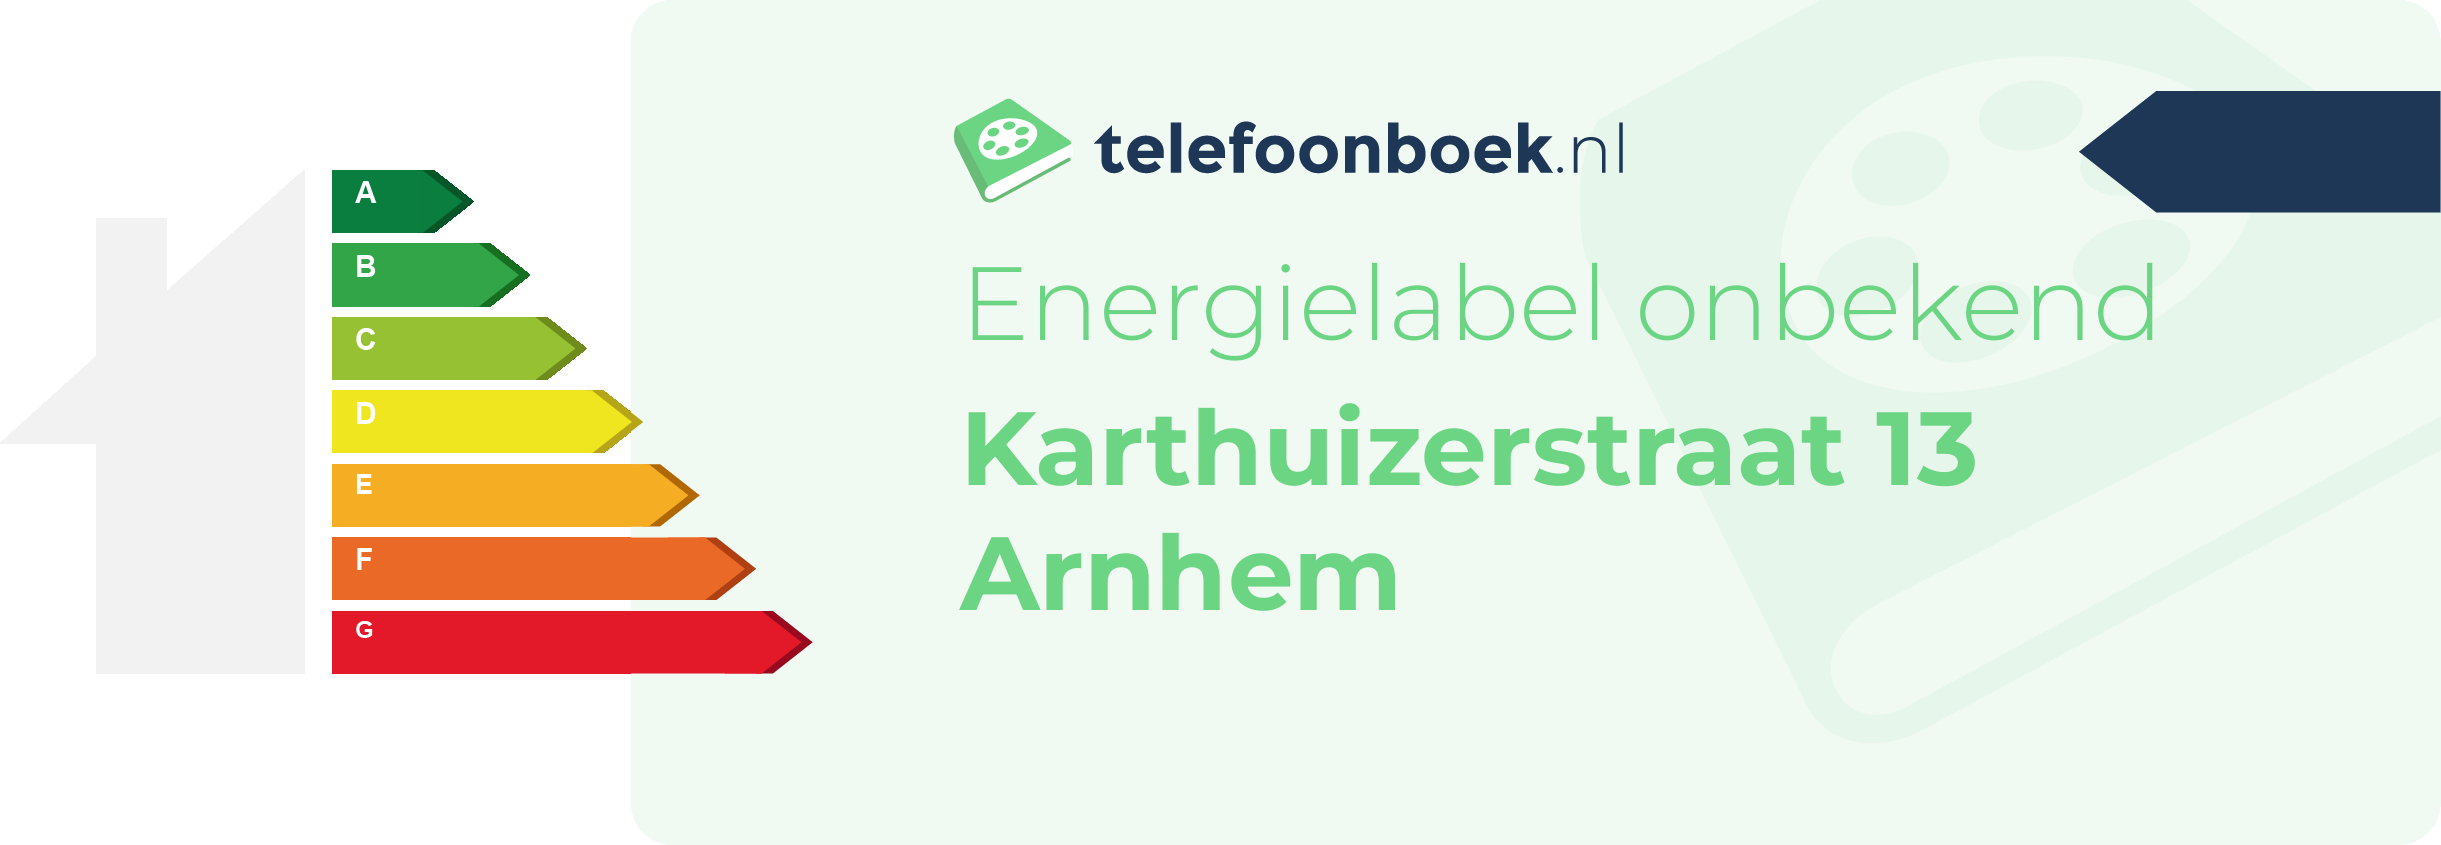 Energielabel Karthuizerstraat 13 Arnhem